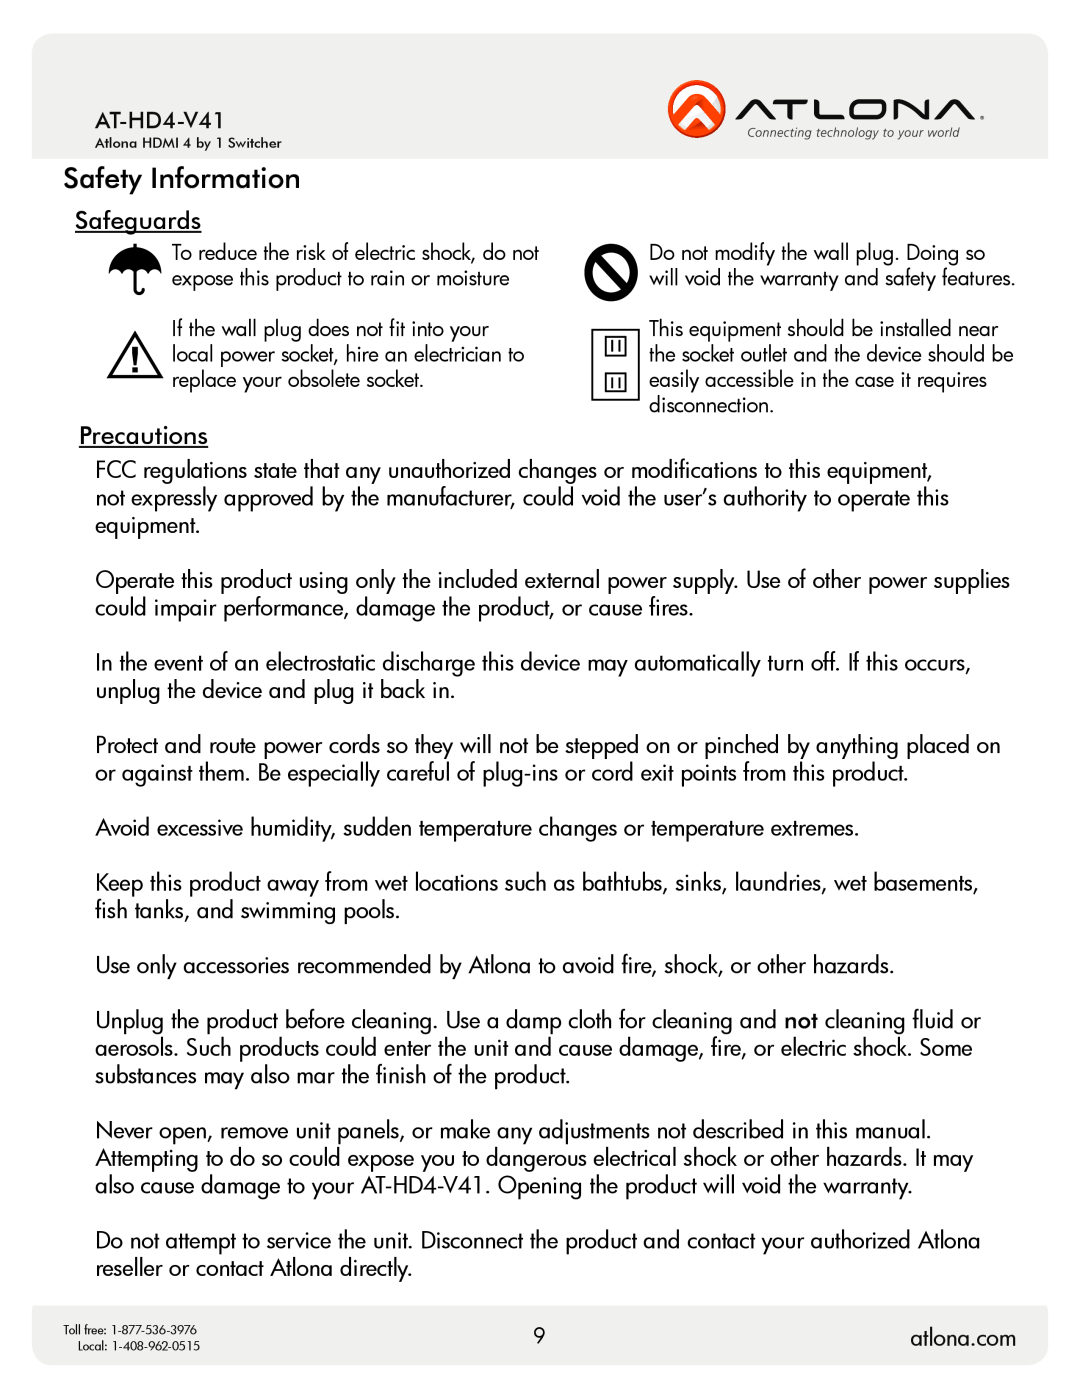 Atlona AT-HD4-V41 user manual Safety Information, Safeguards, Precautions, atlona.com 